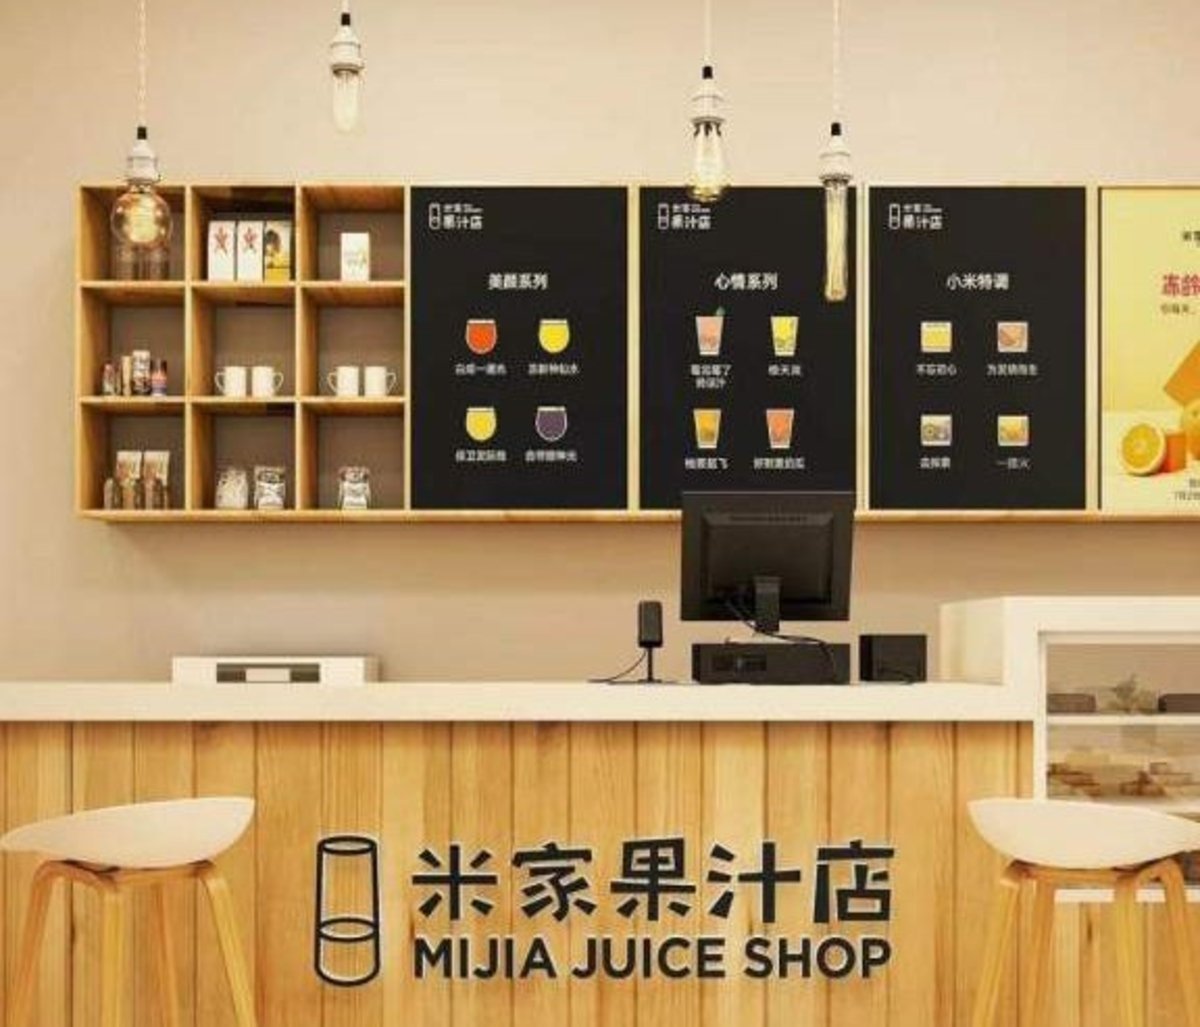 mijia juice shop